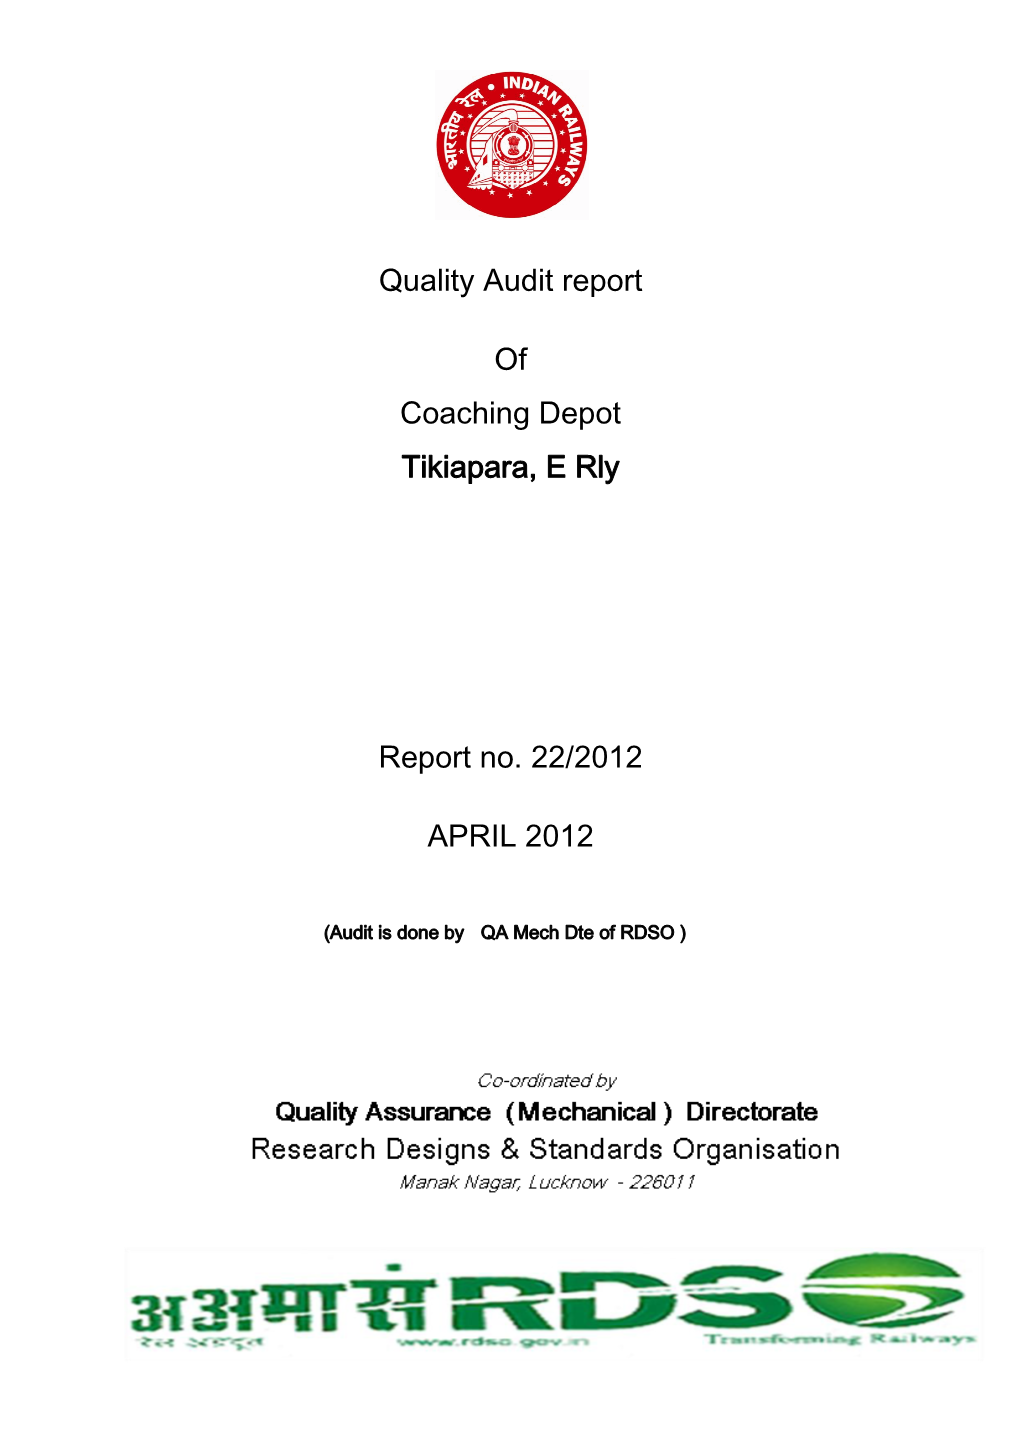 Quality Audit Report of Coaching Depot Tikiapara, E Rly Report No